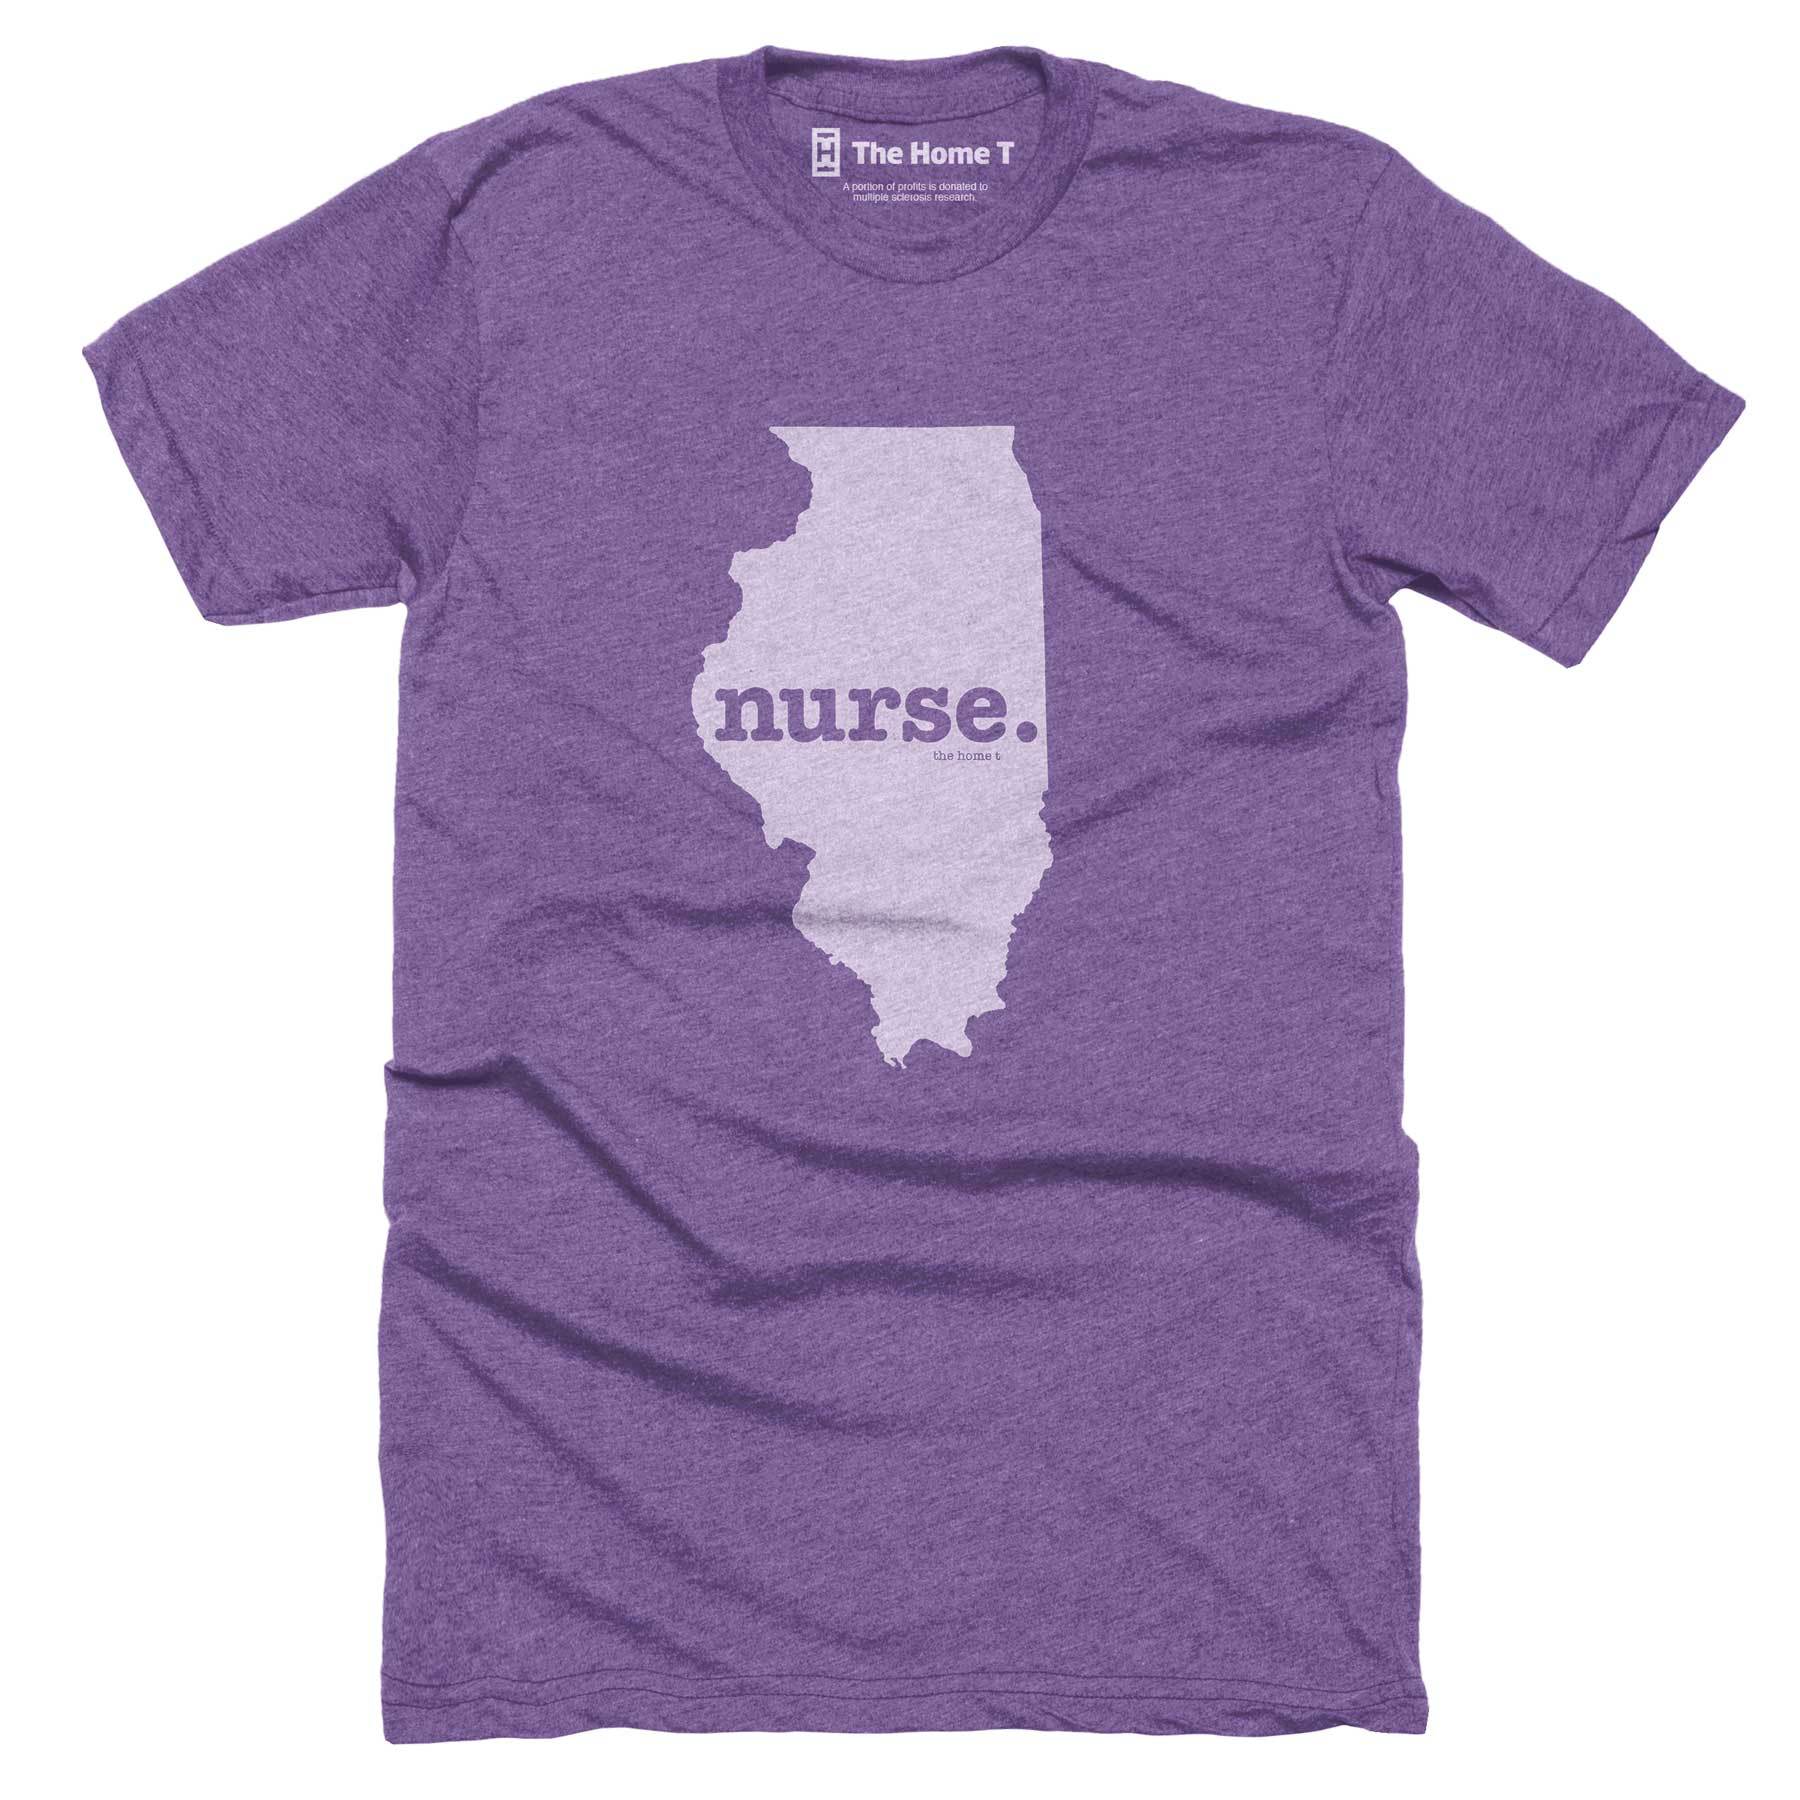 Illinois Nurse Home T-Shirt Occupation The Home T